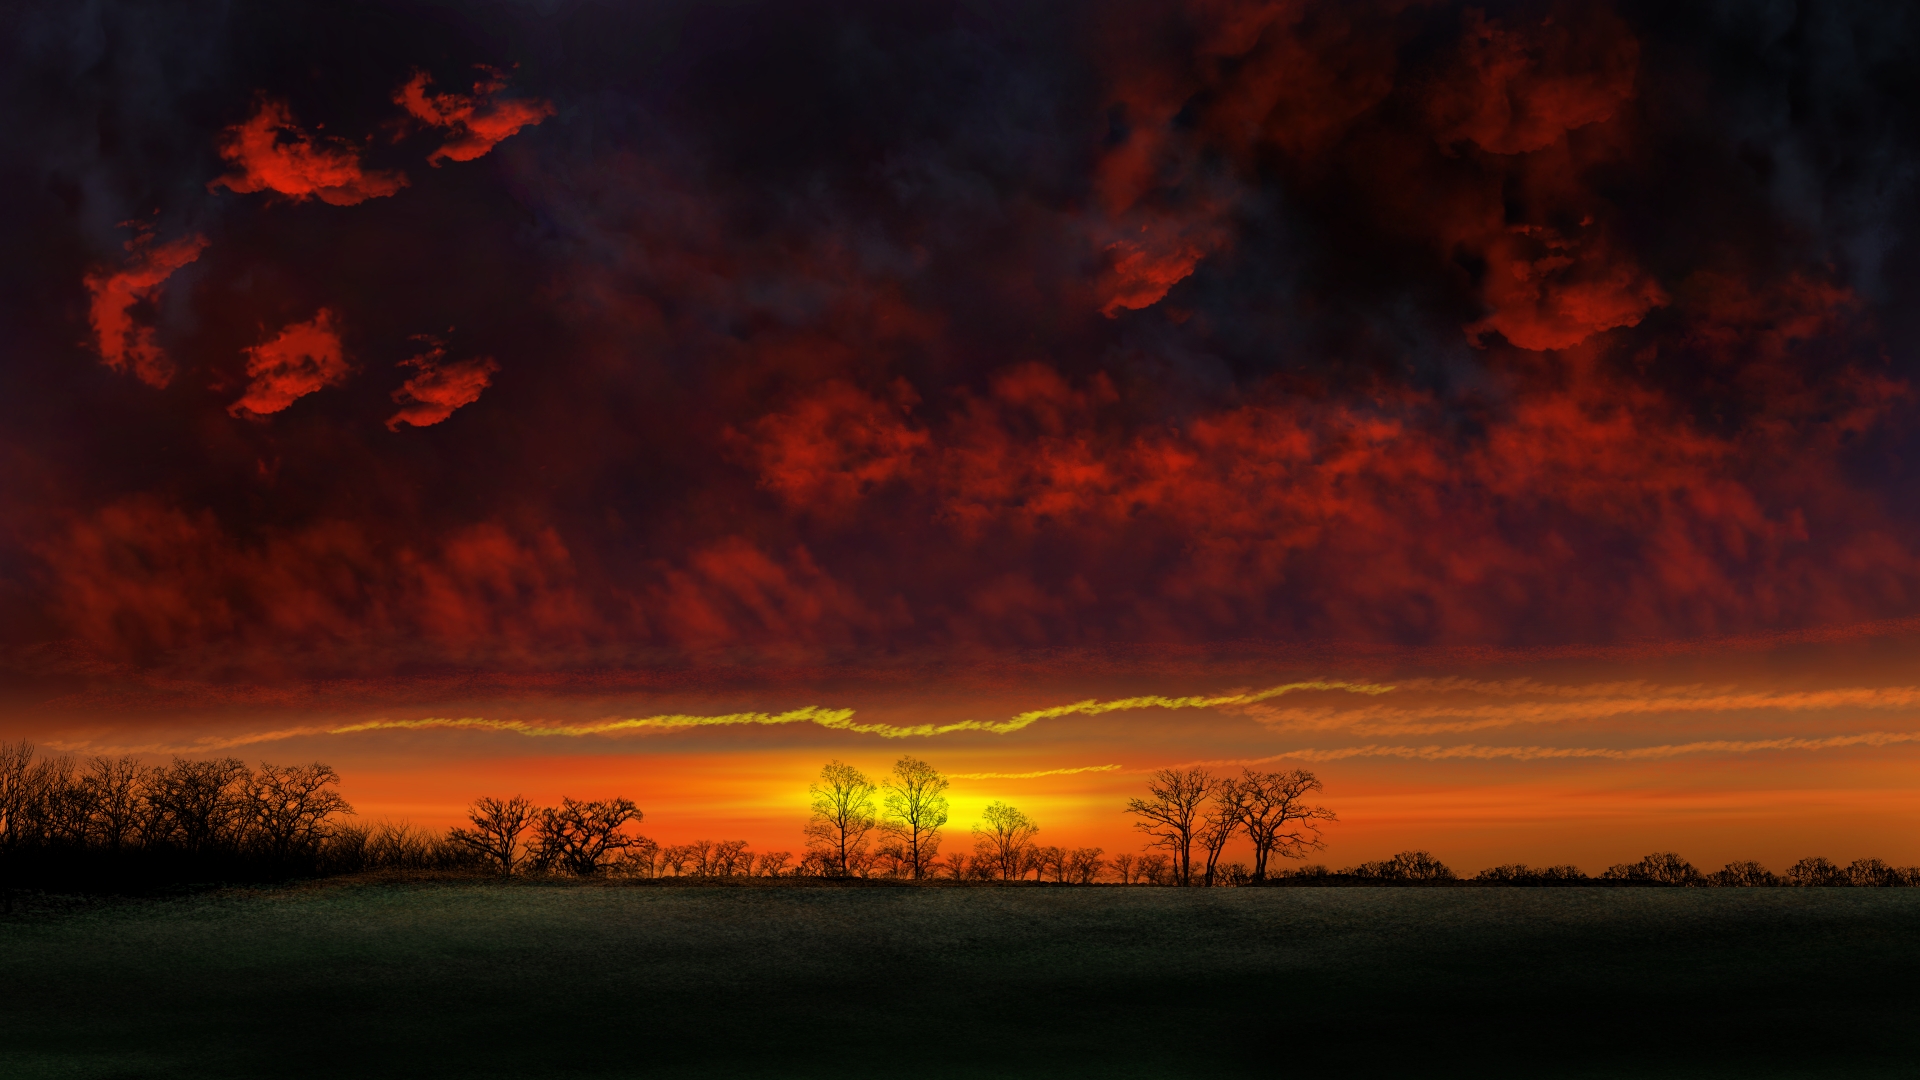 Digital Painting Digital Art Nature Landscape Colorful Sunset 1920x1080